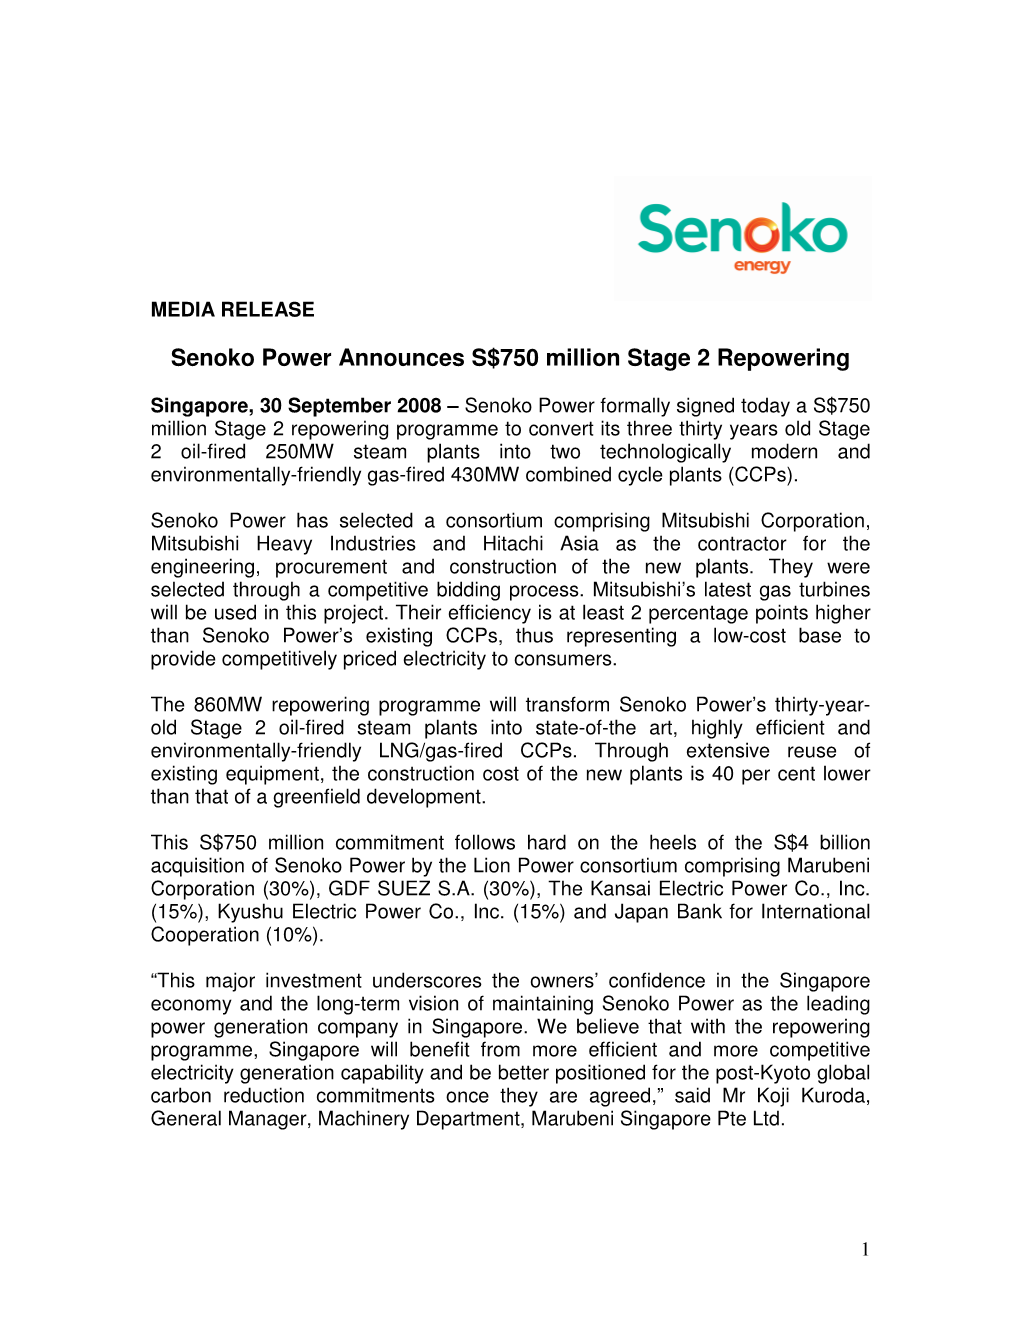 Senoko Power Announces S$750 Million Stage 2 Repowering